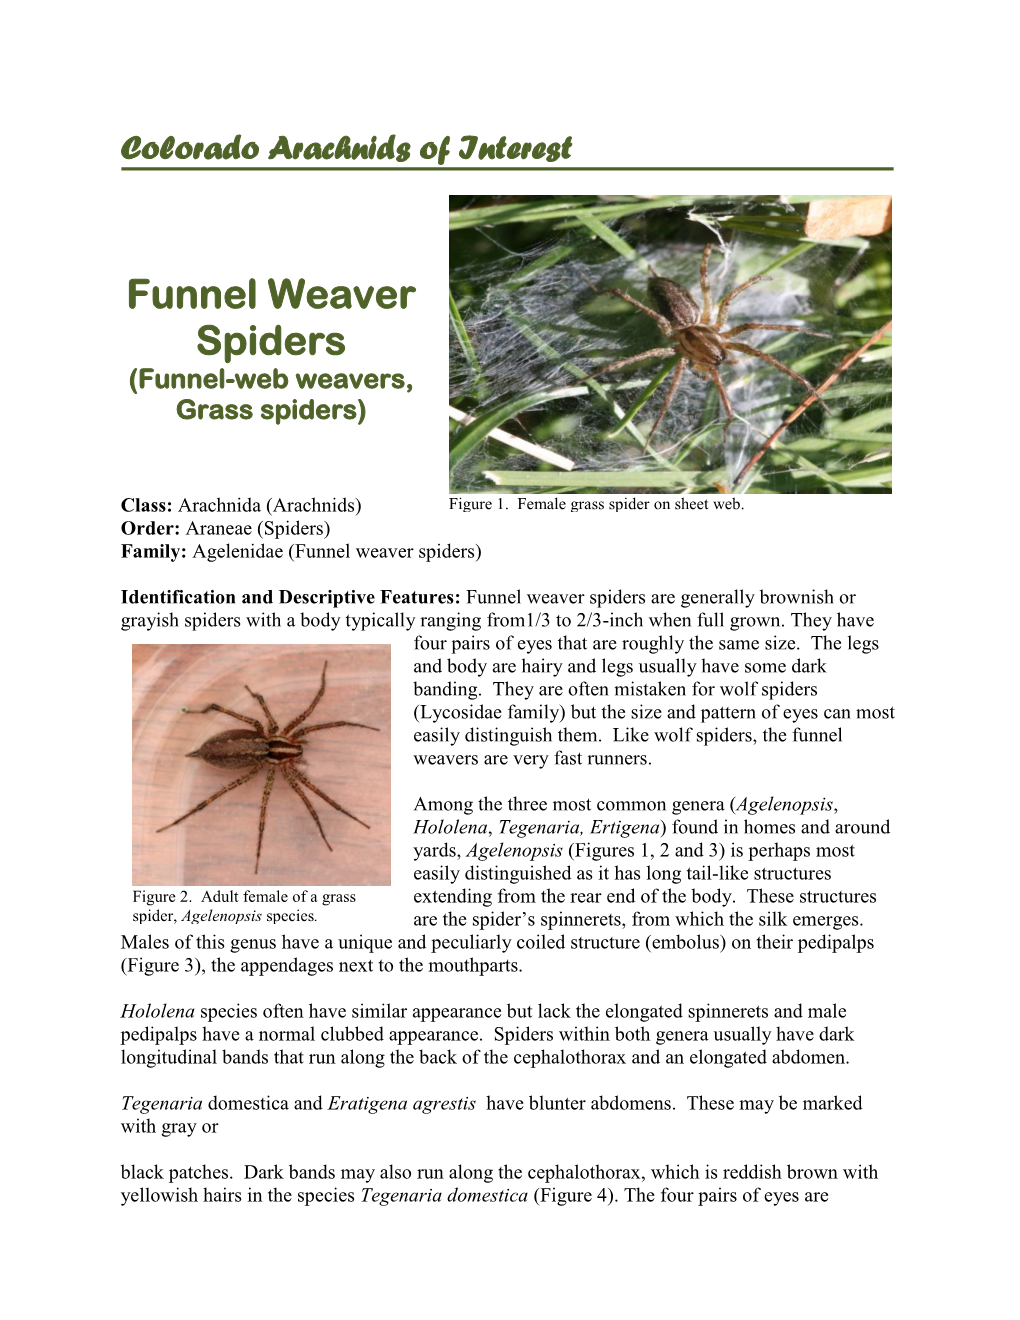 Funnel Weaver Spiders (Funnel-Web Weavers, Grass Spiders)